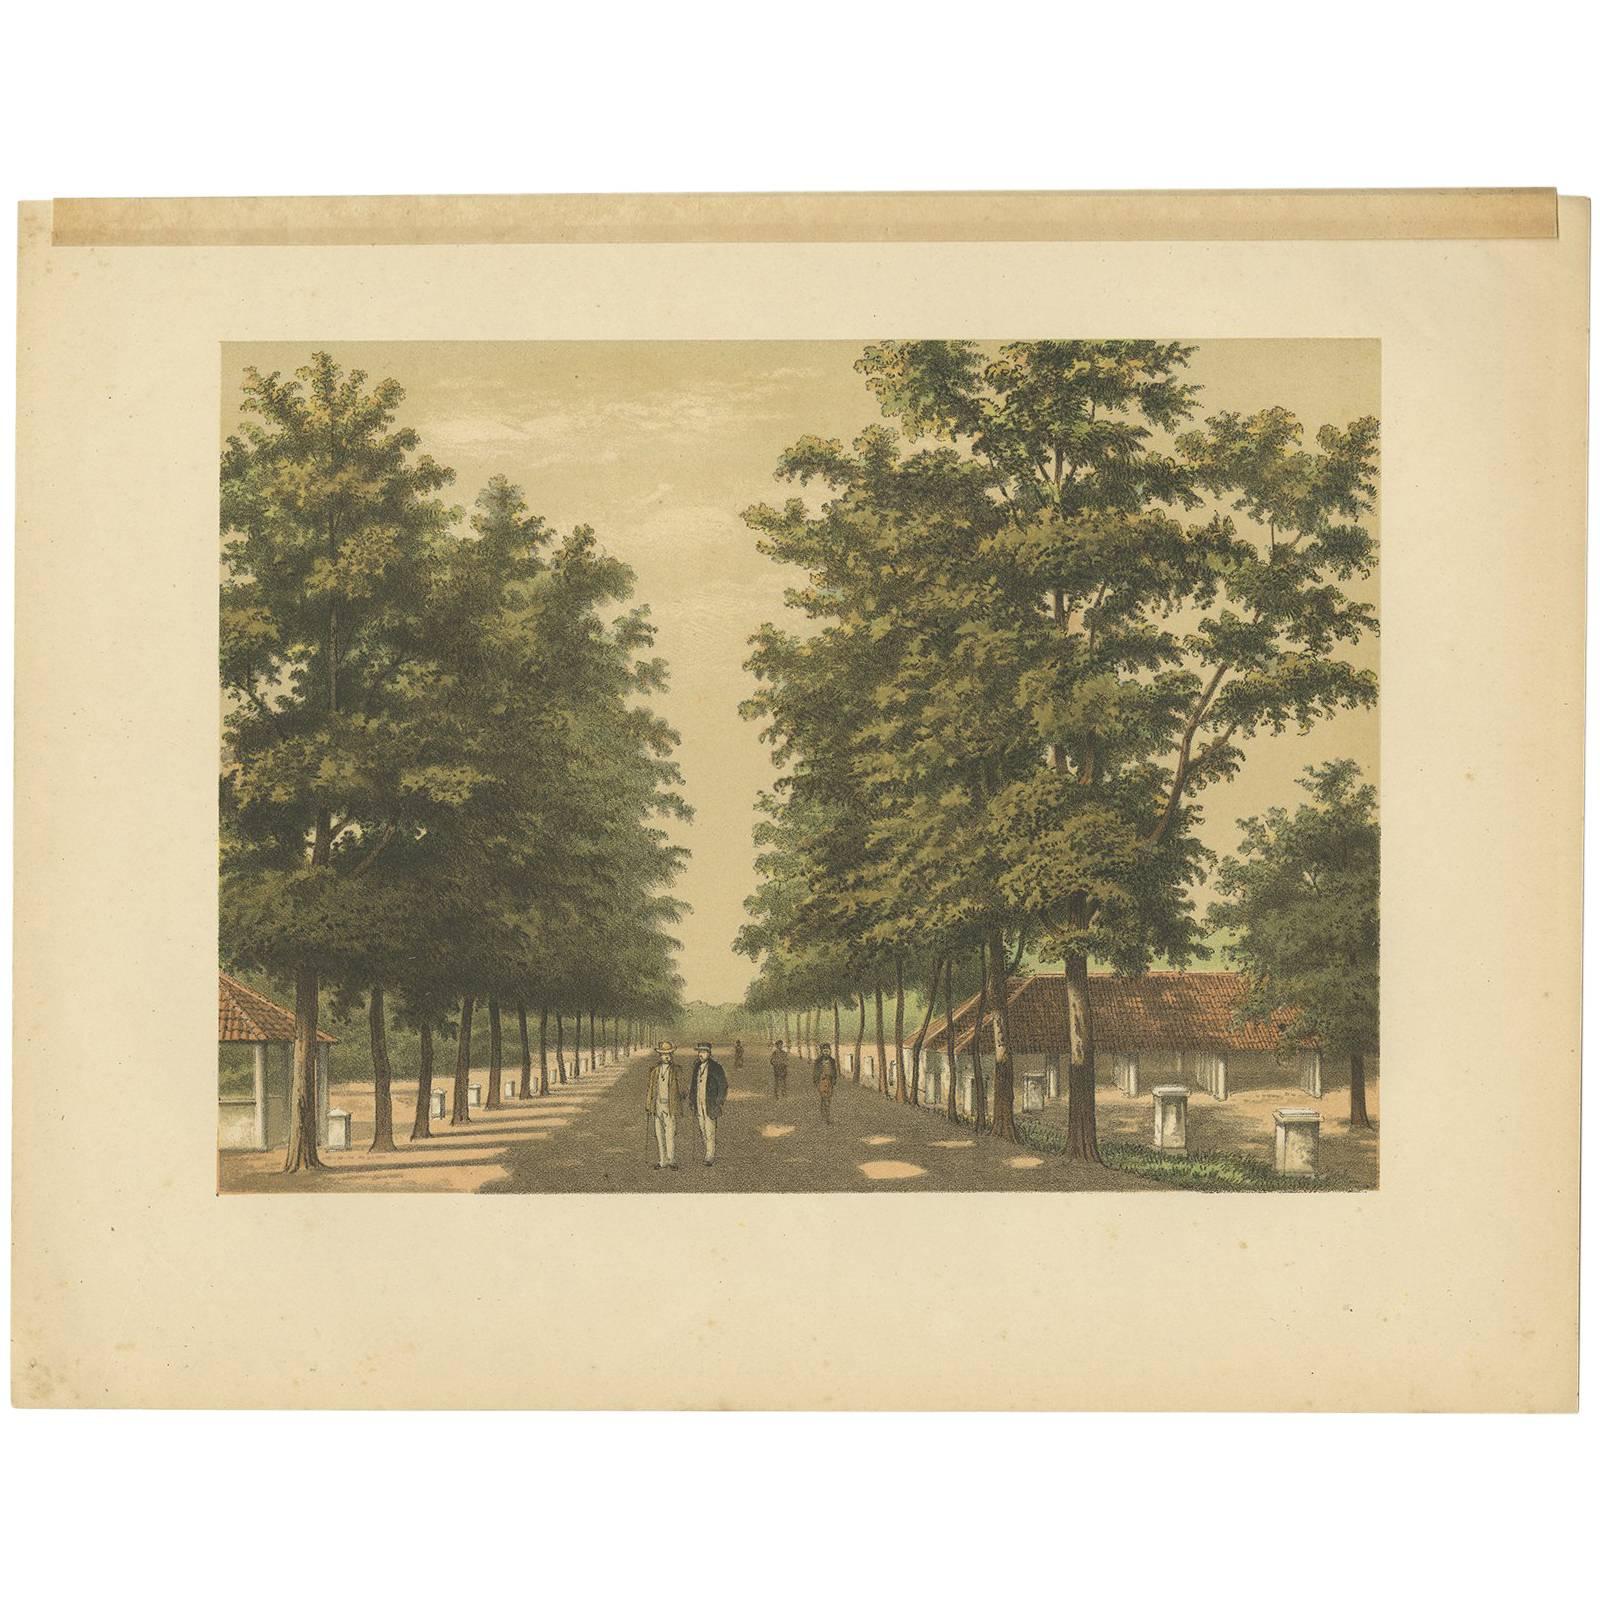 Antique Print of Avenue Paja Koembah 'Sumatra' by M.T.H. Perelaer, 1888